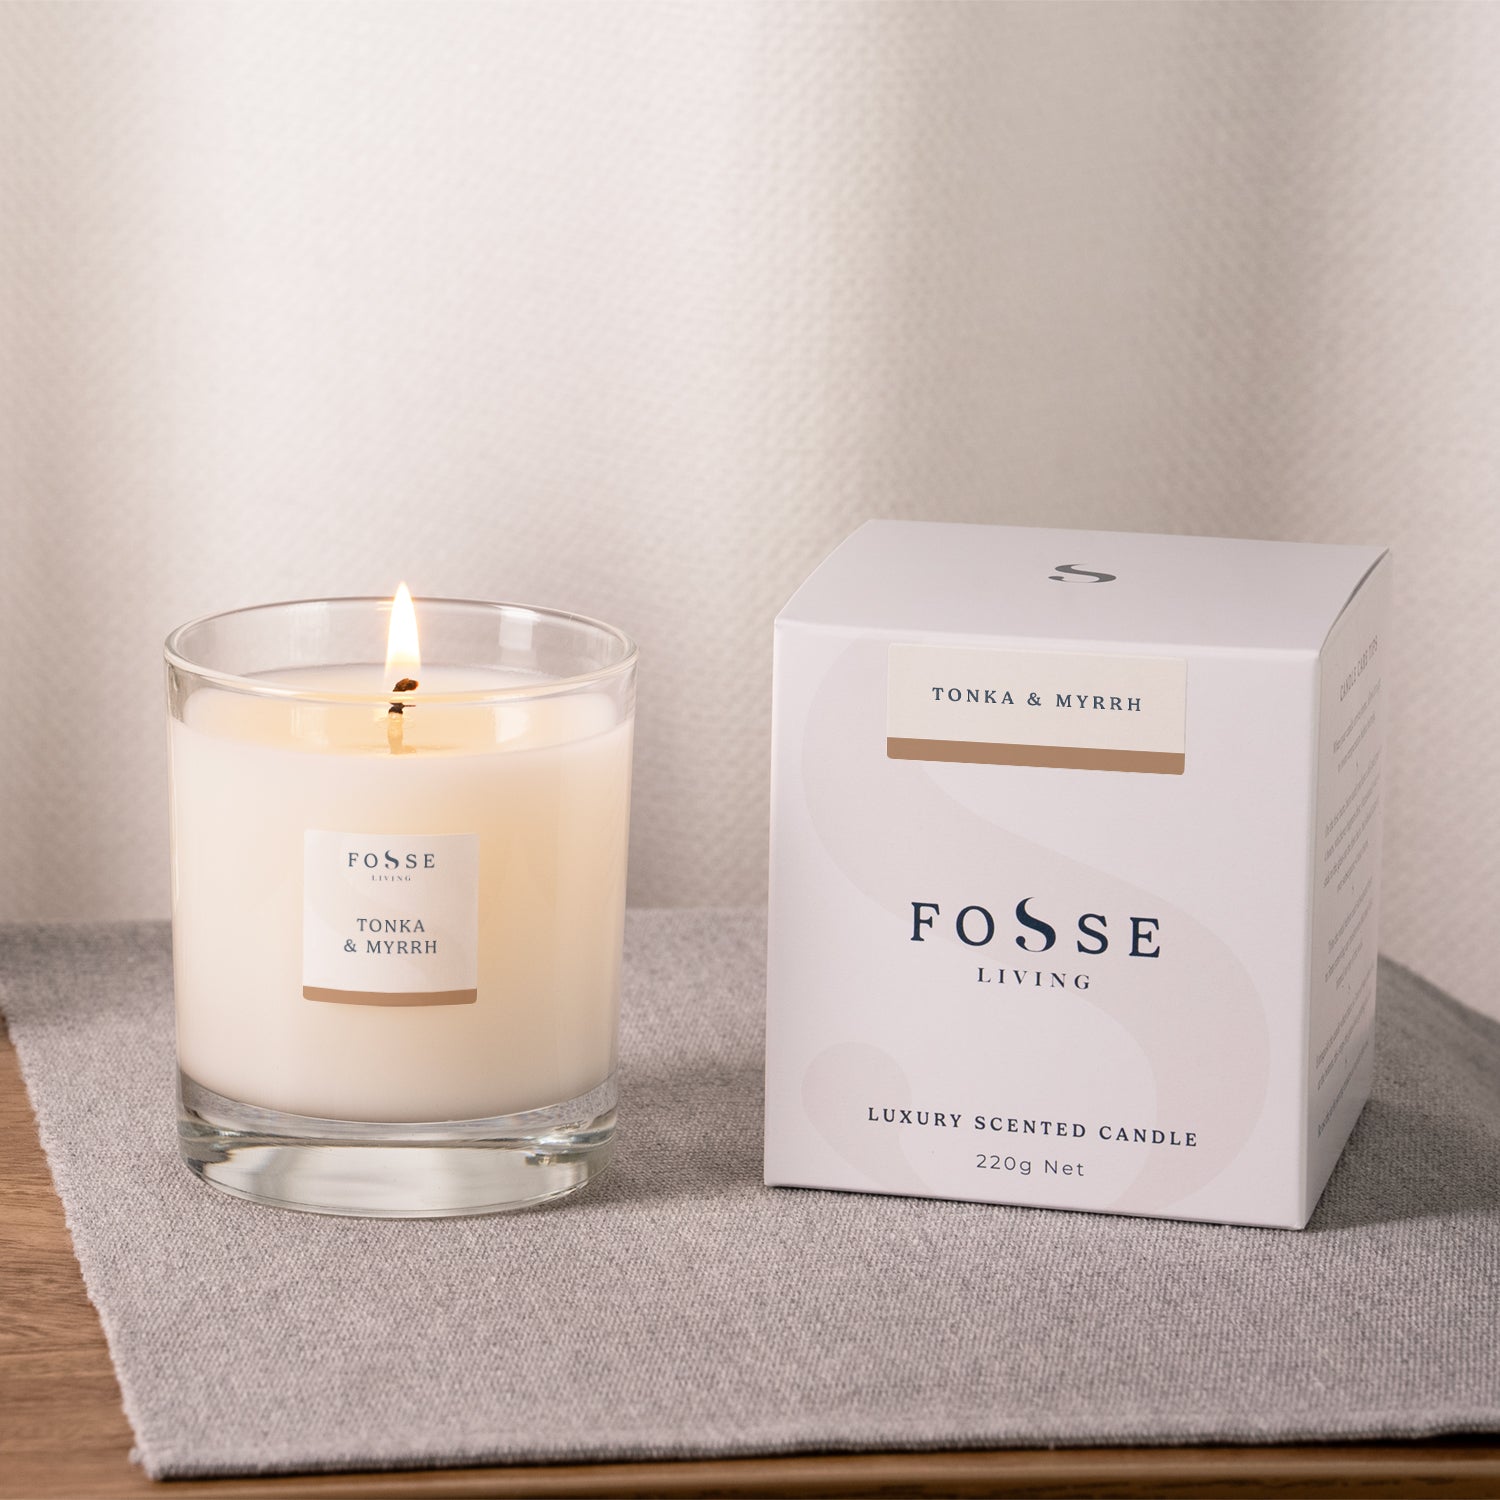 Tonka & Myrrh Scented Candle - Fosse Living | Luxury Home Fragrances